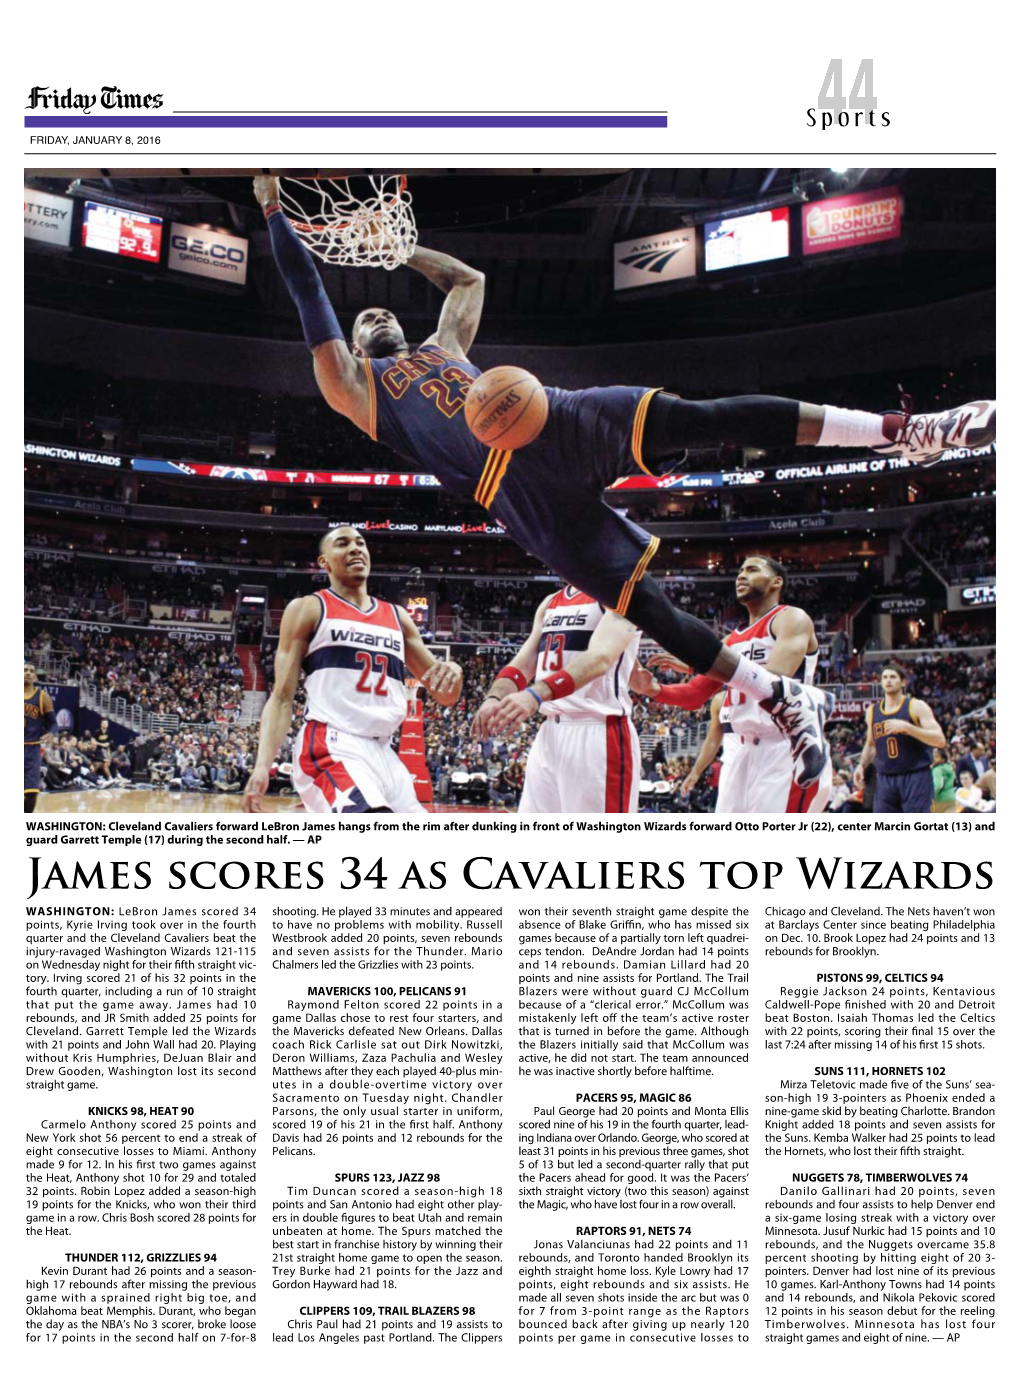 James Scores 34 As Cavaliers Top Wizards